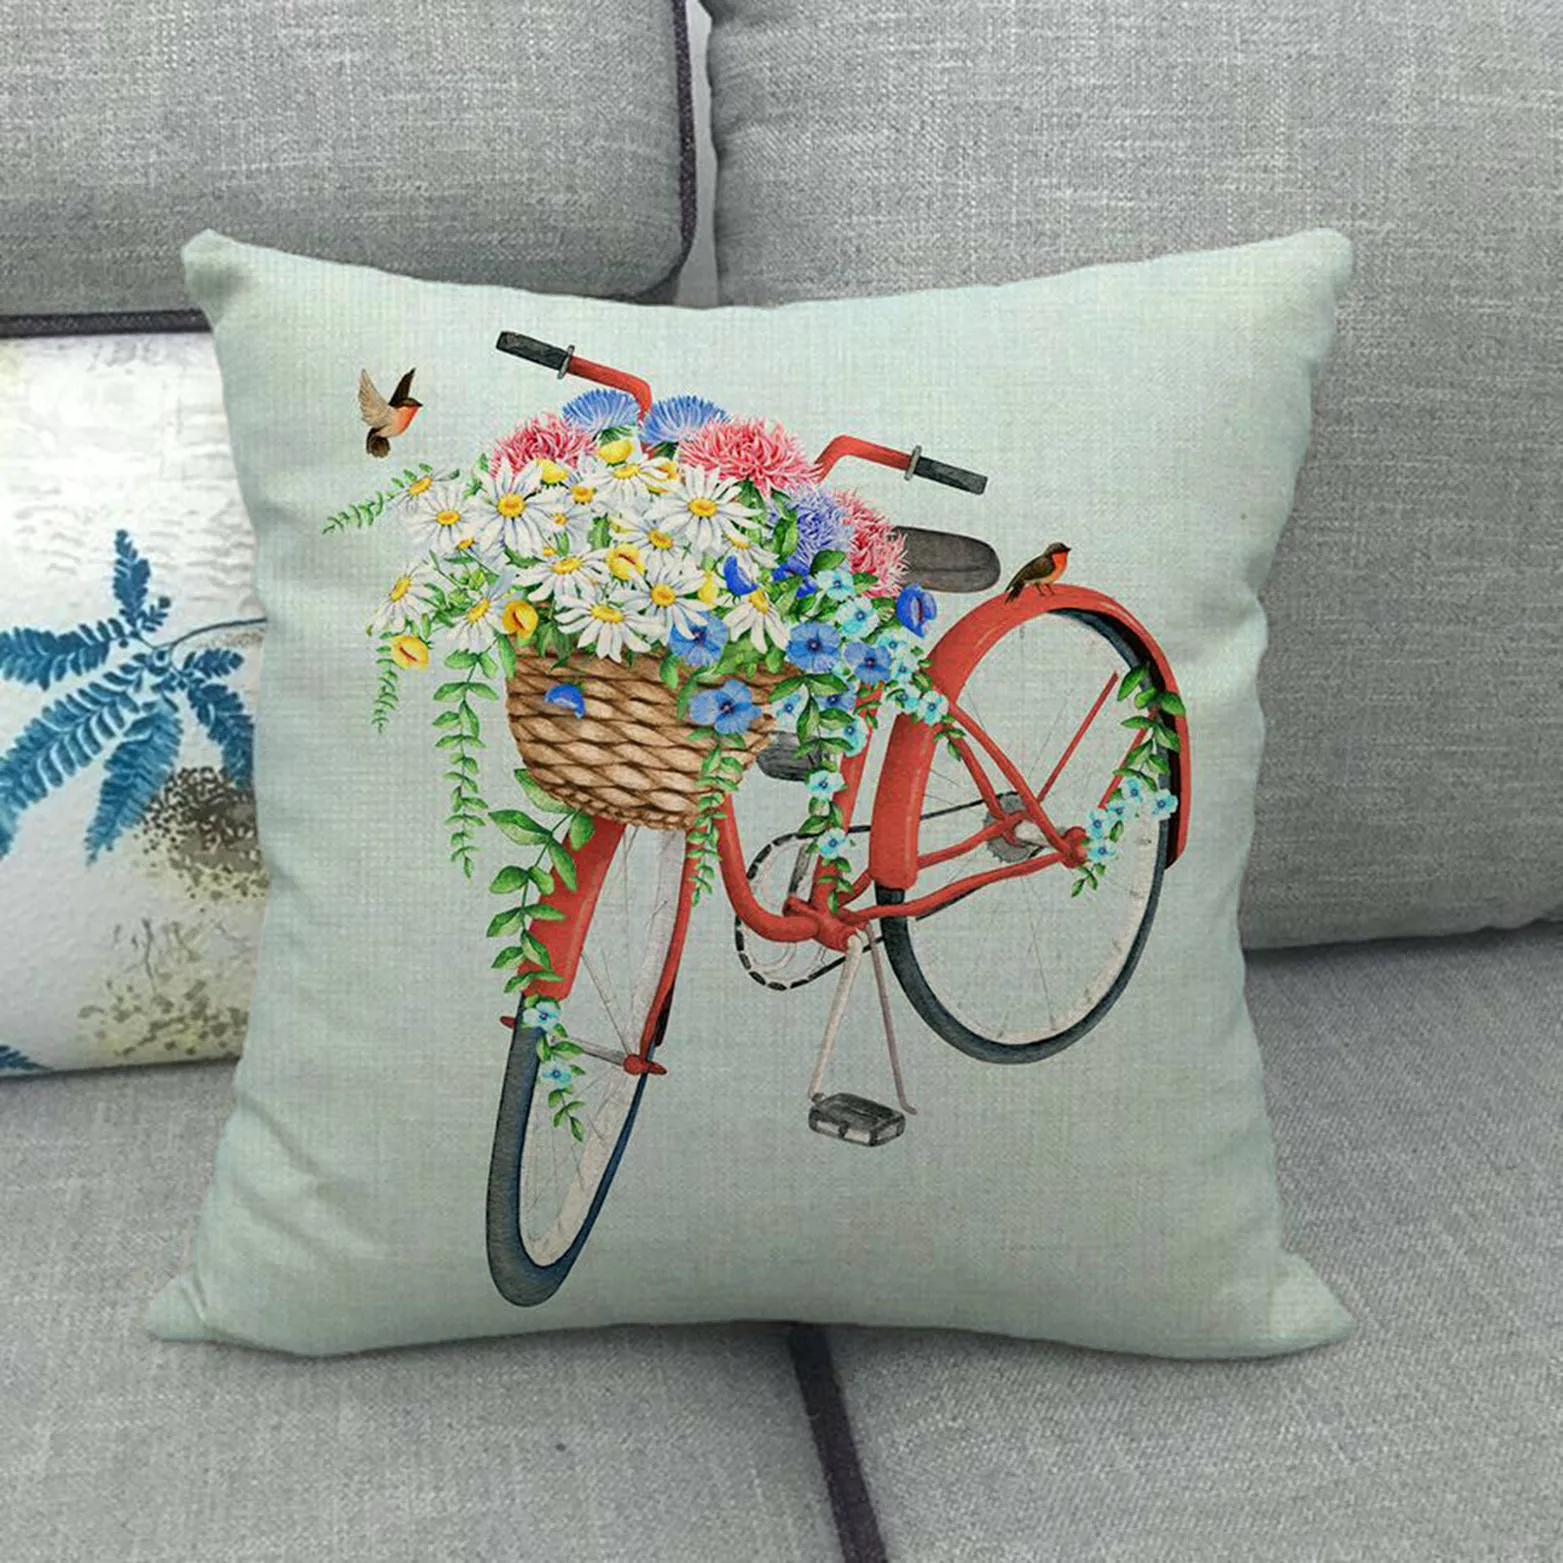  Funda de cojín decorativa para sillón de bicicleta de color  azul acuarela artístico con flores en actividad, otoño, hermoso ramo de  bicicleta, funda de cojín suave para sofá o dormitorio, 18.0